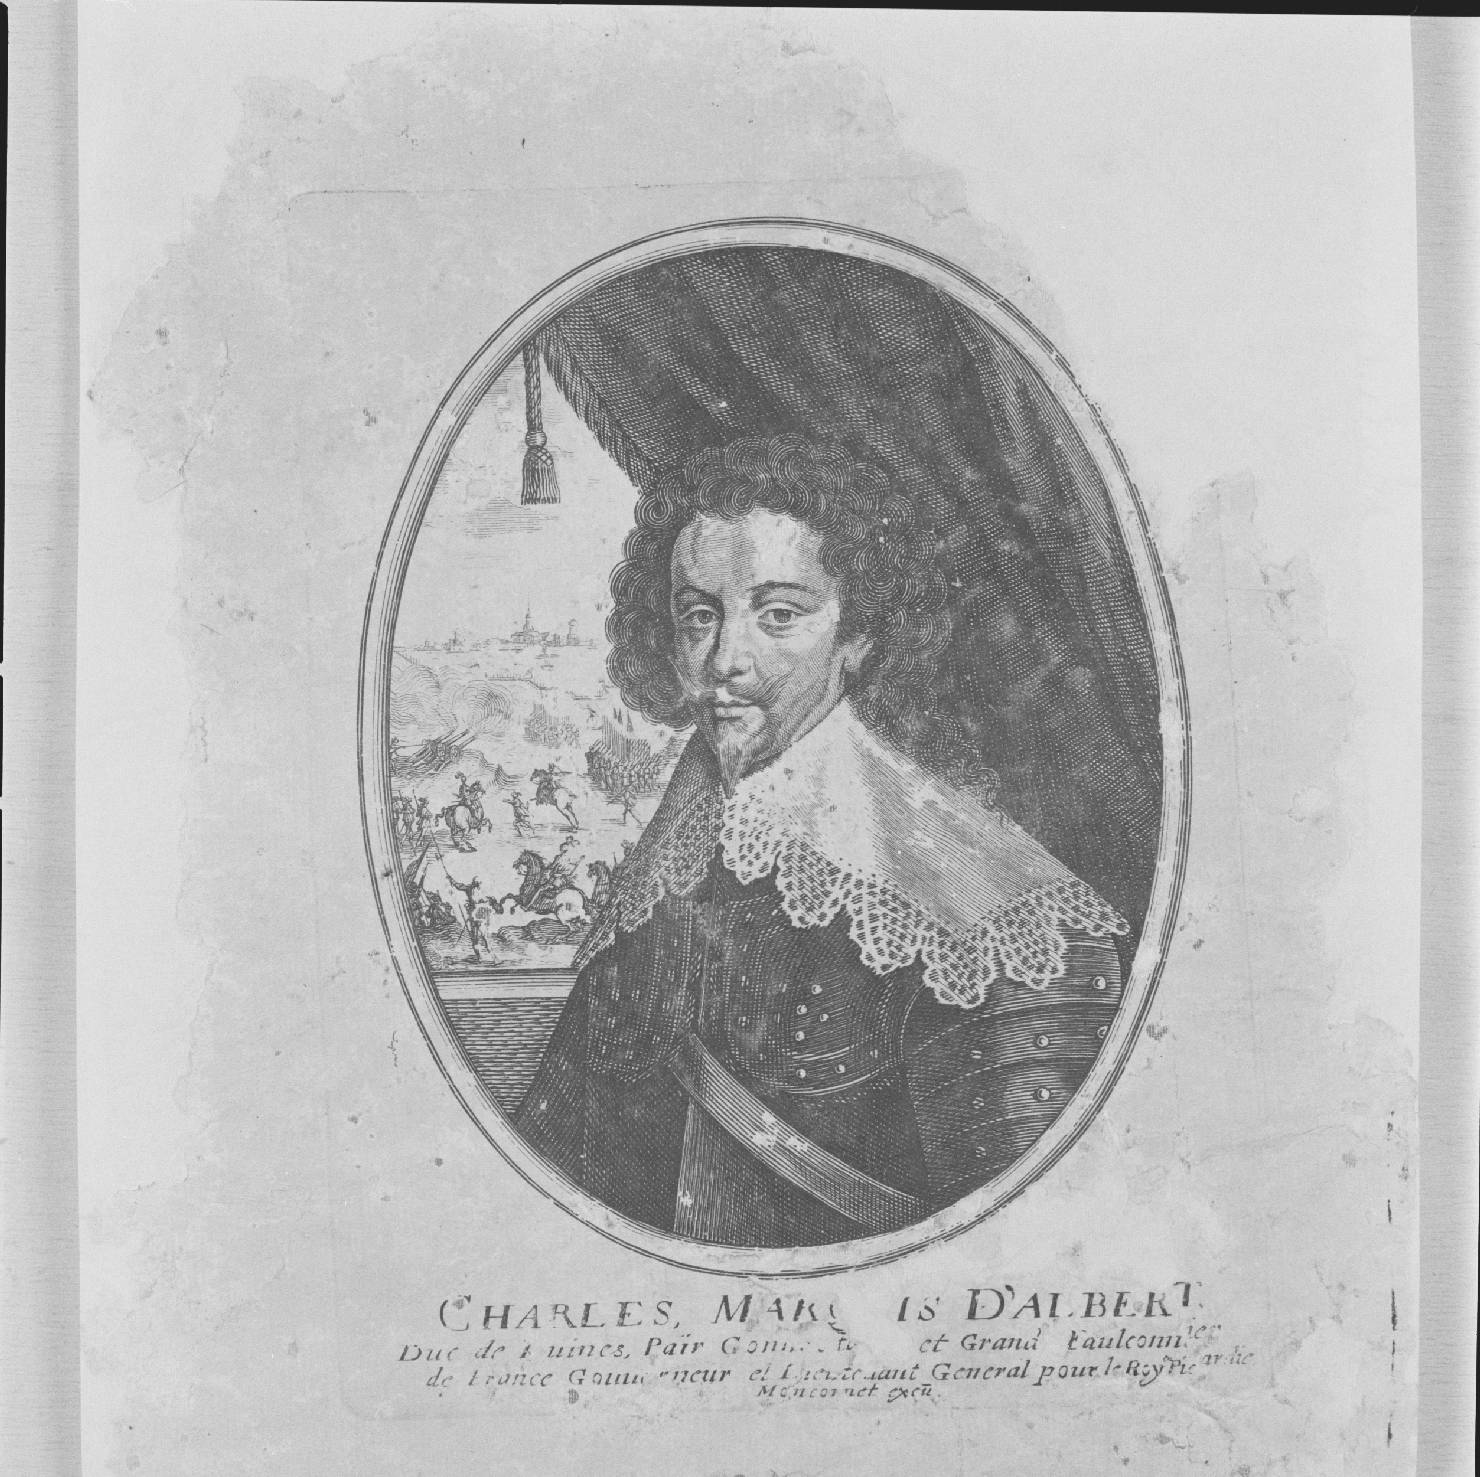 ritratto di Charles marchese d'Albert (stampa smarginata, serie) - ambito francese, ambito francese, ambito francese (sec. XVII)